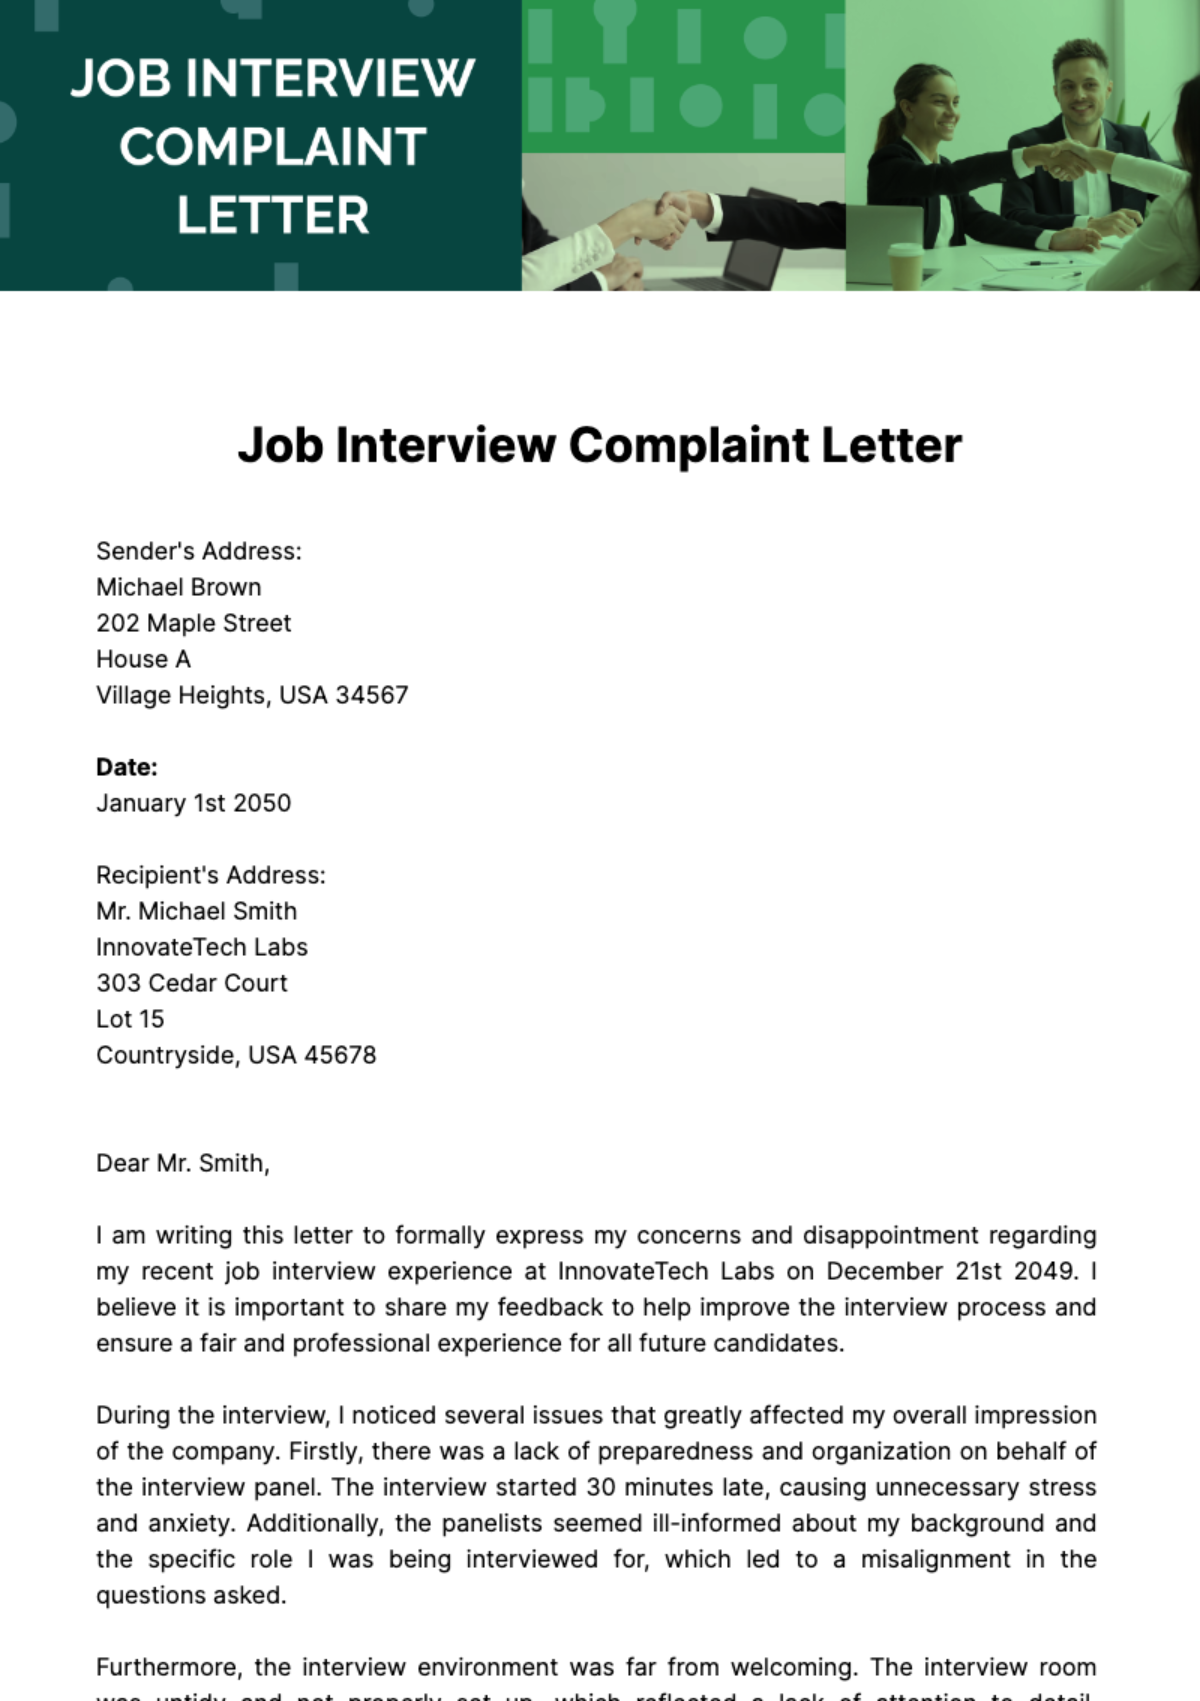 Free Job Interview Complaint Letter Template